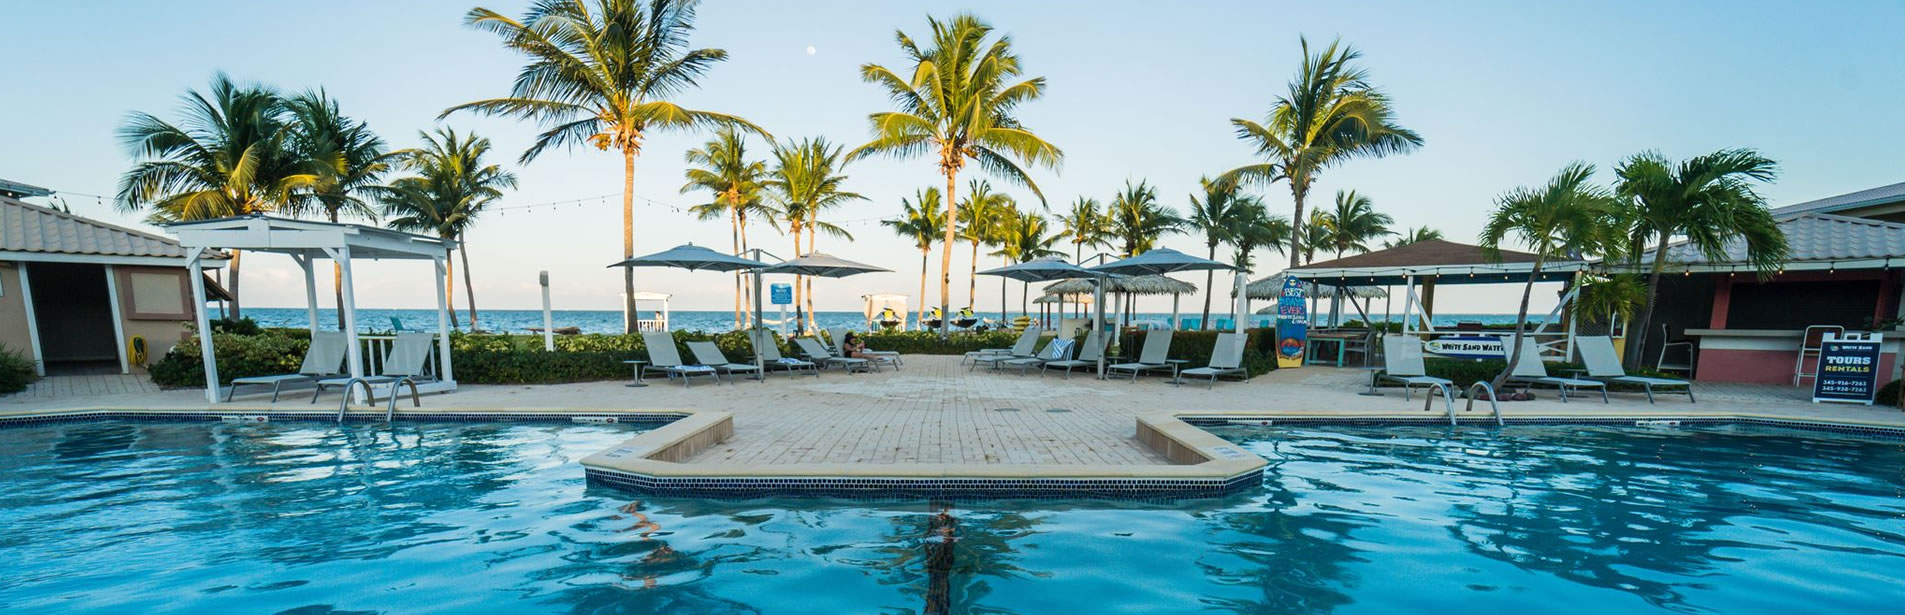 the grand caymanian resort pool